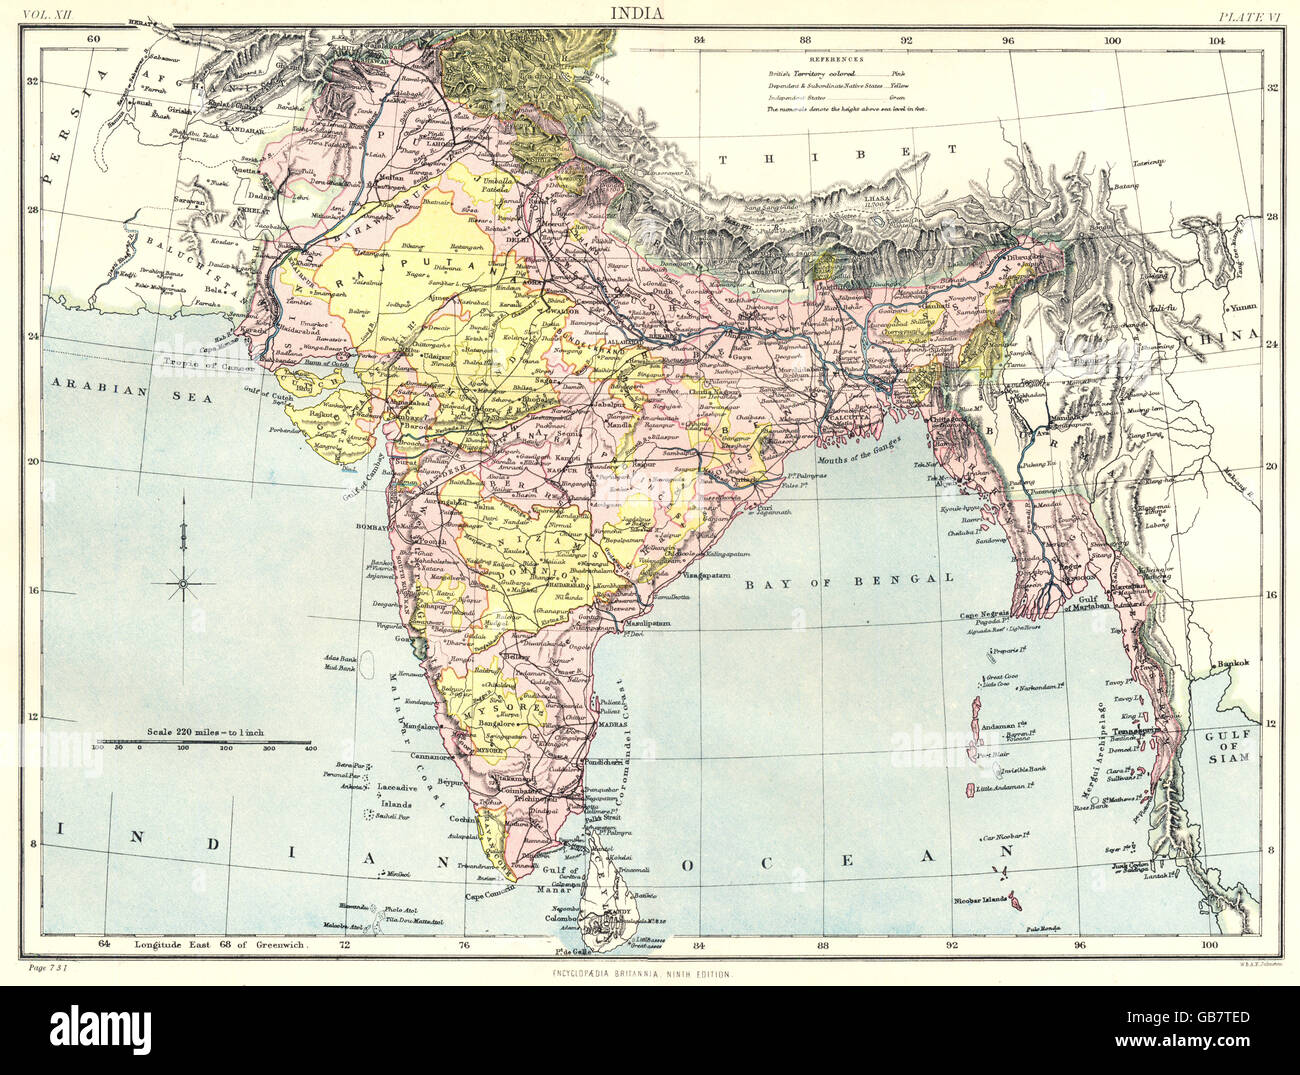 INDIA: Showing British, Native & Independent states. Britannica 9th edi 1898 map Stock Photo